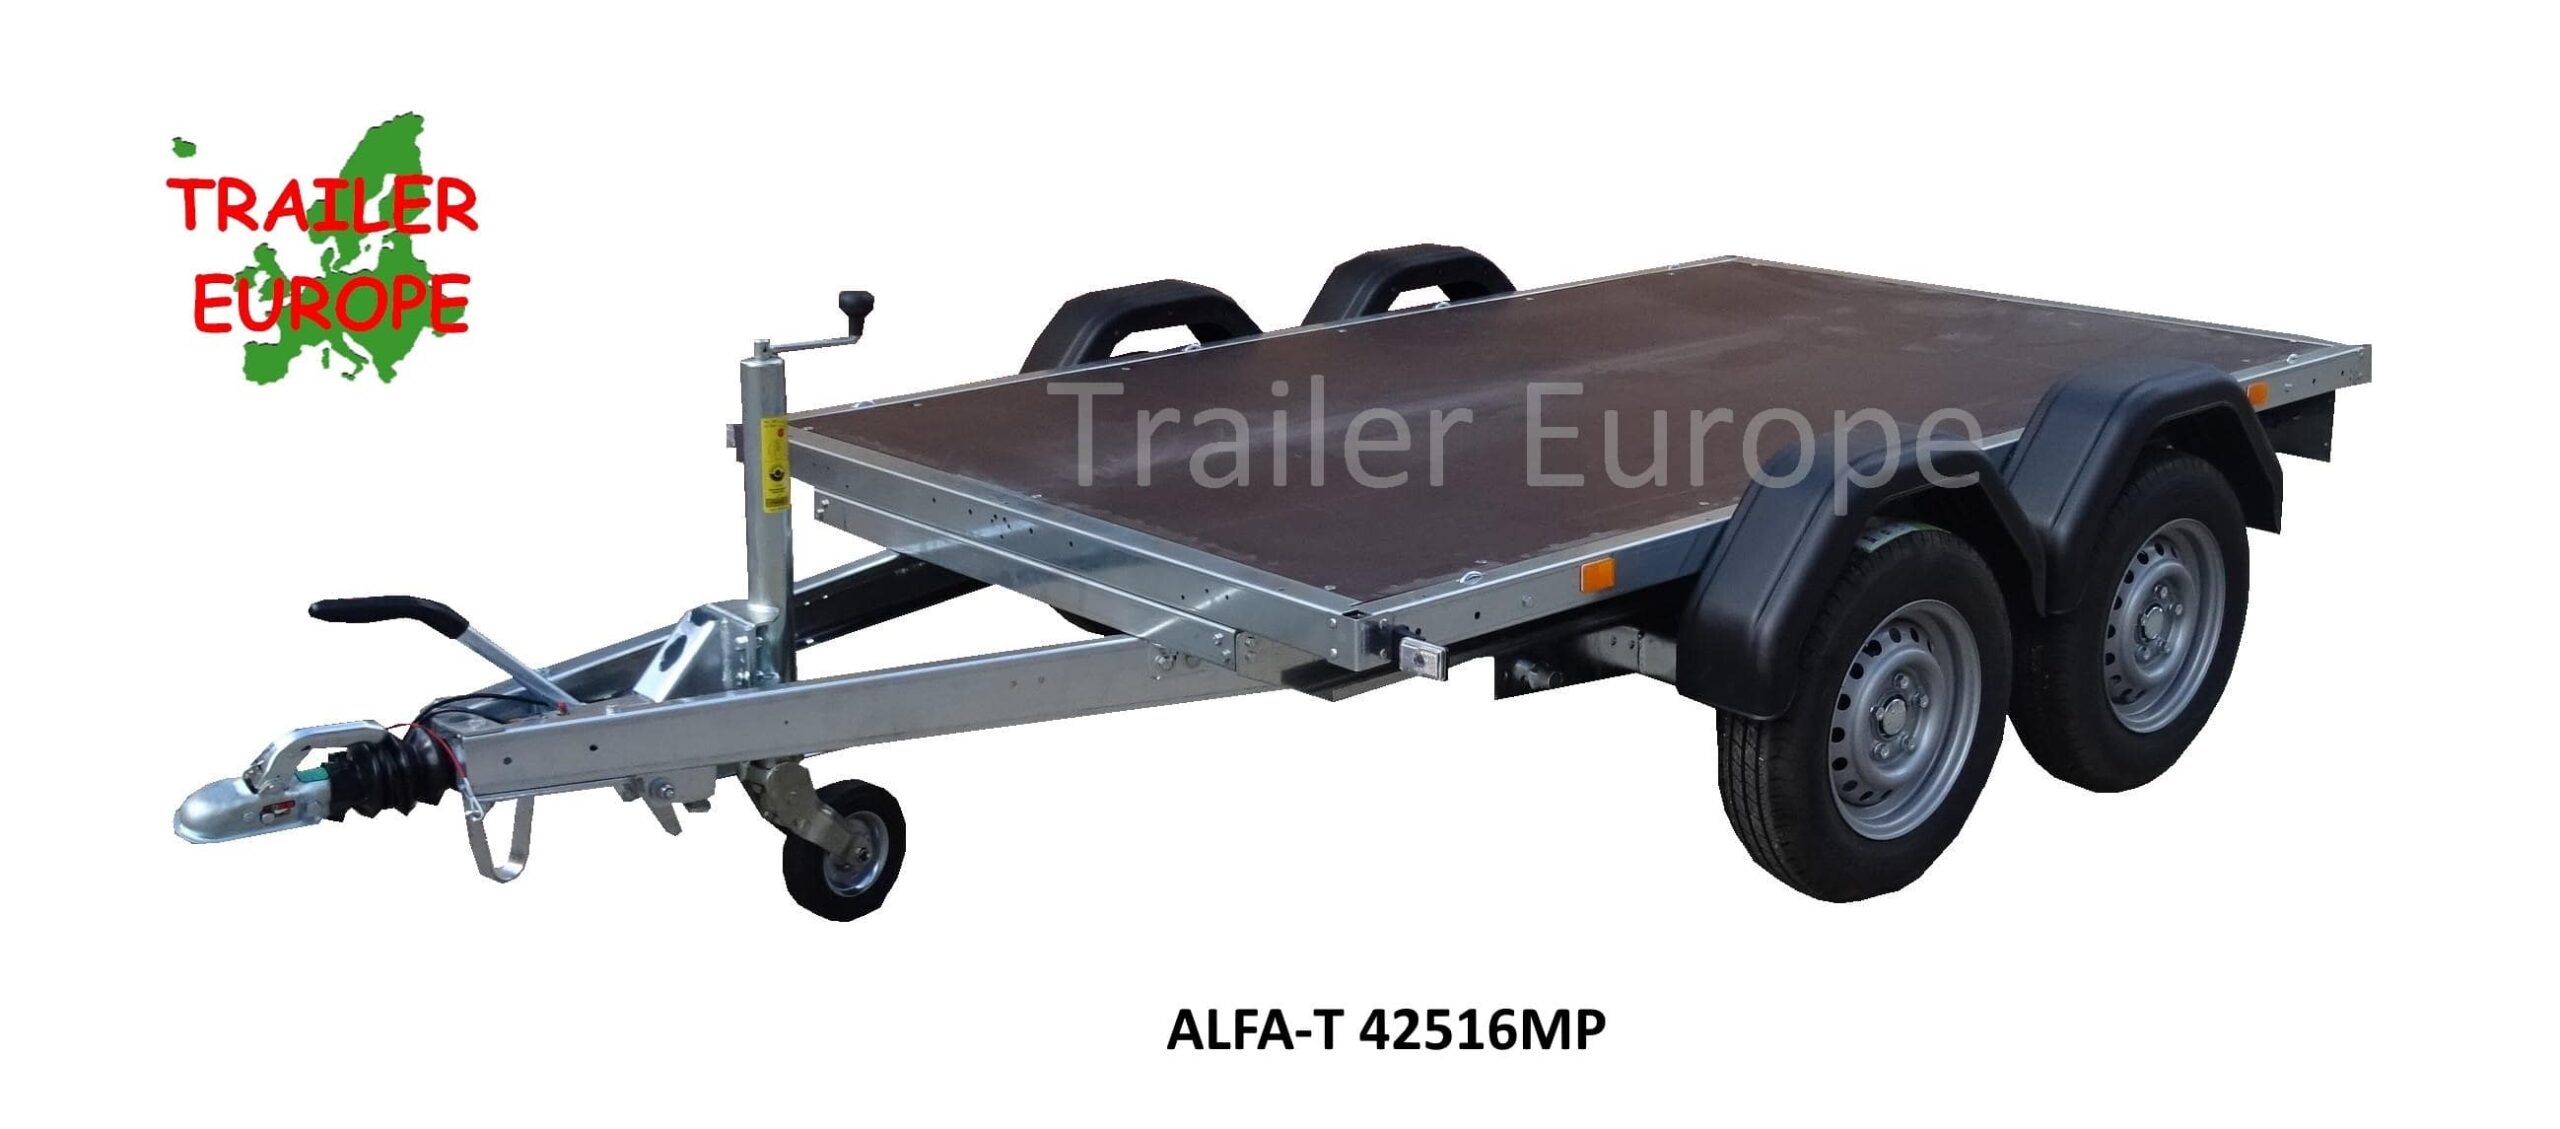 trailereurope ALFA-T 42518mp